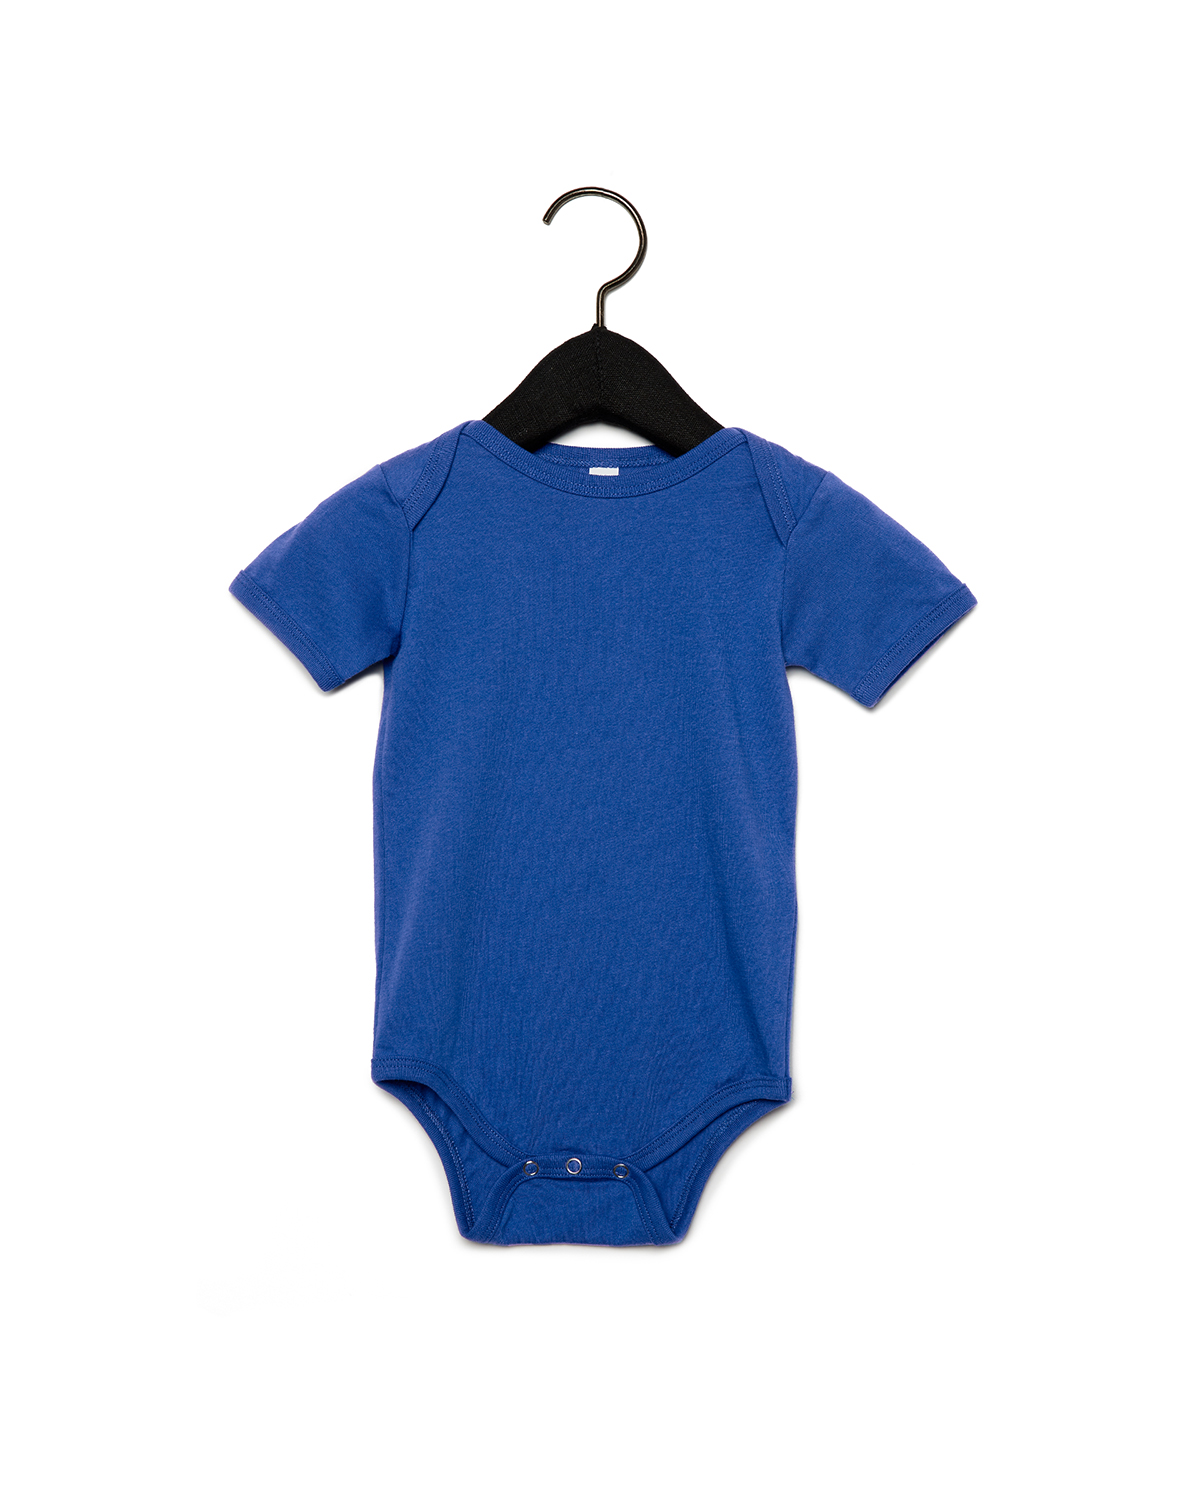 Can Am Spyder Logo infant Baby Boy Clothes One PIECE Bodysuit